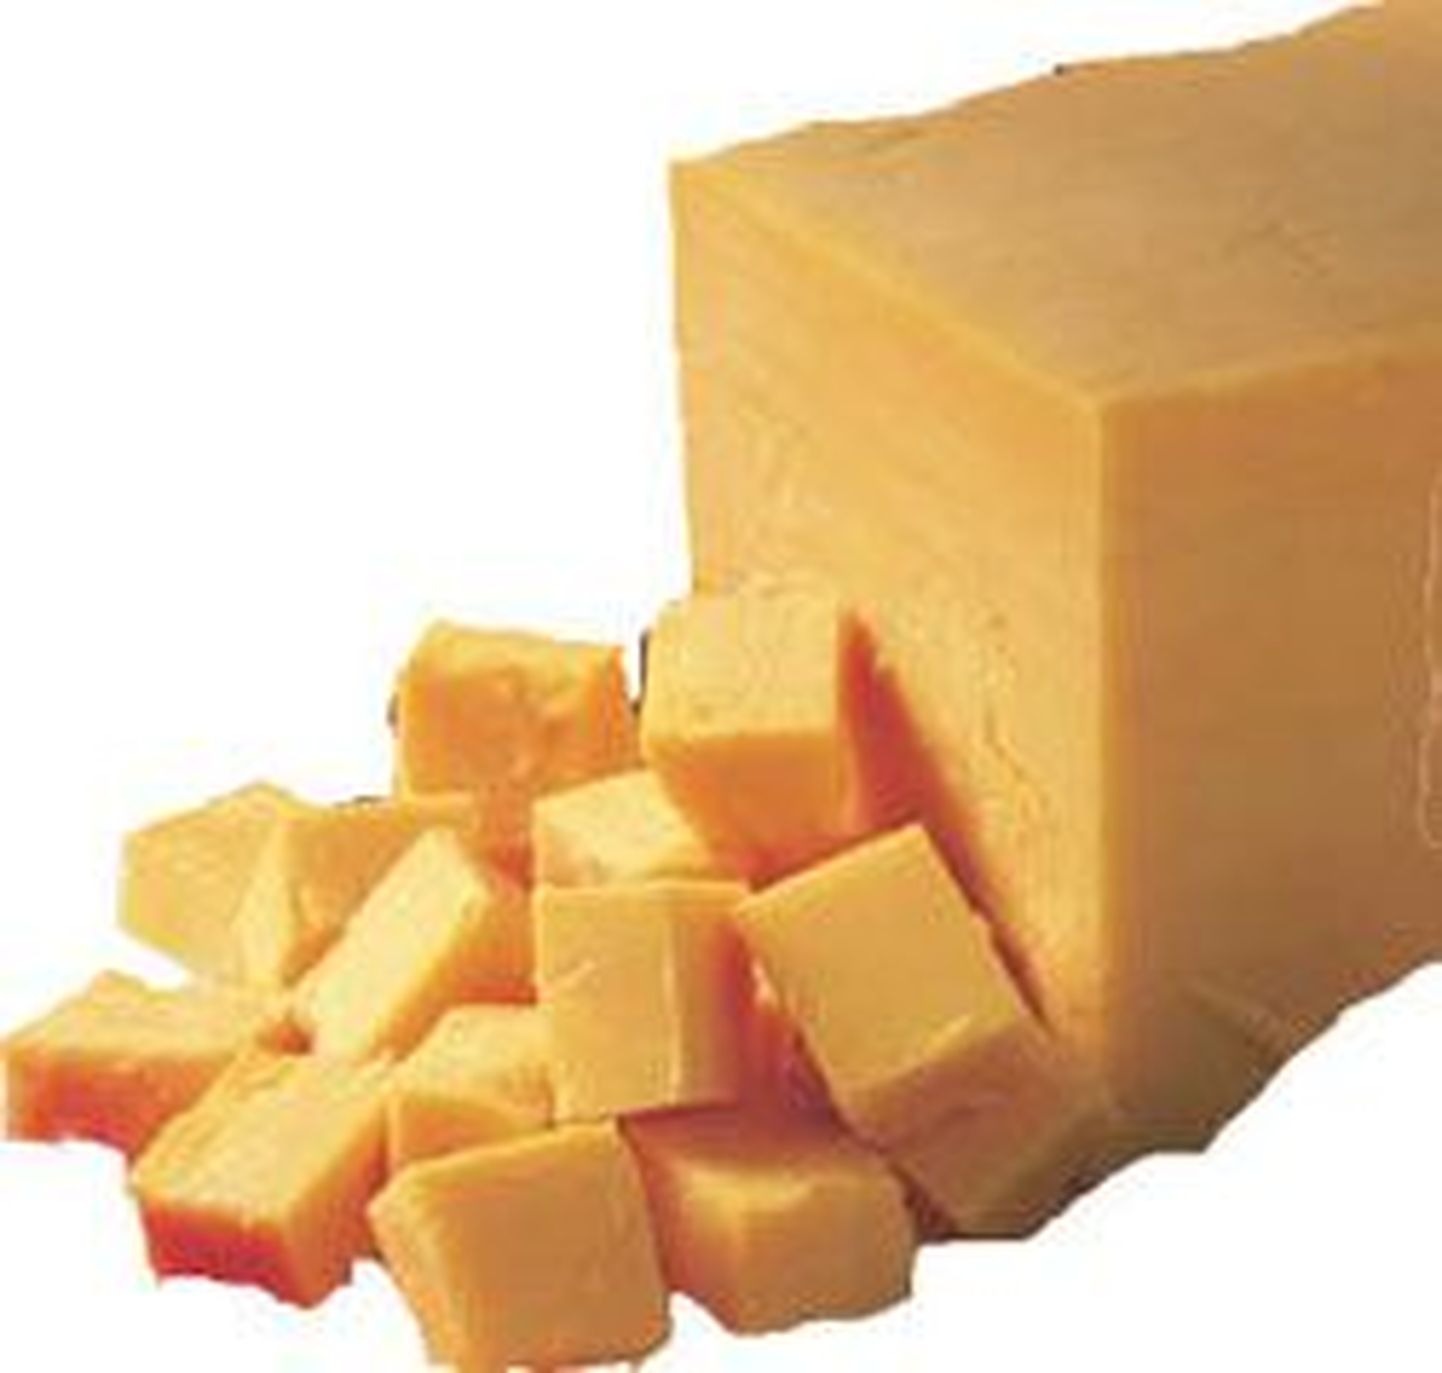 Cheddar juust